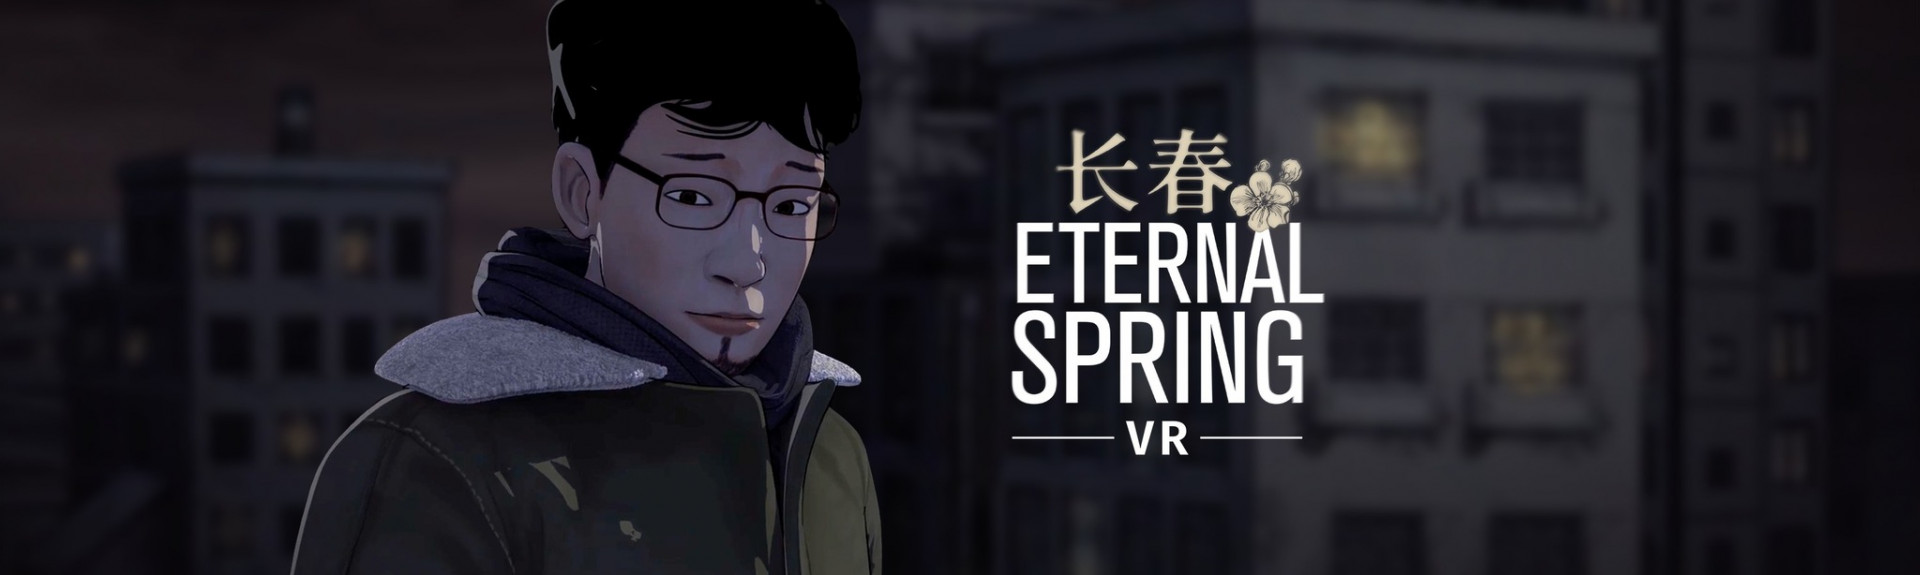 Eternal Spring VR Experience